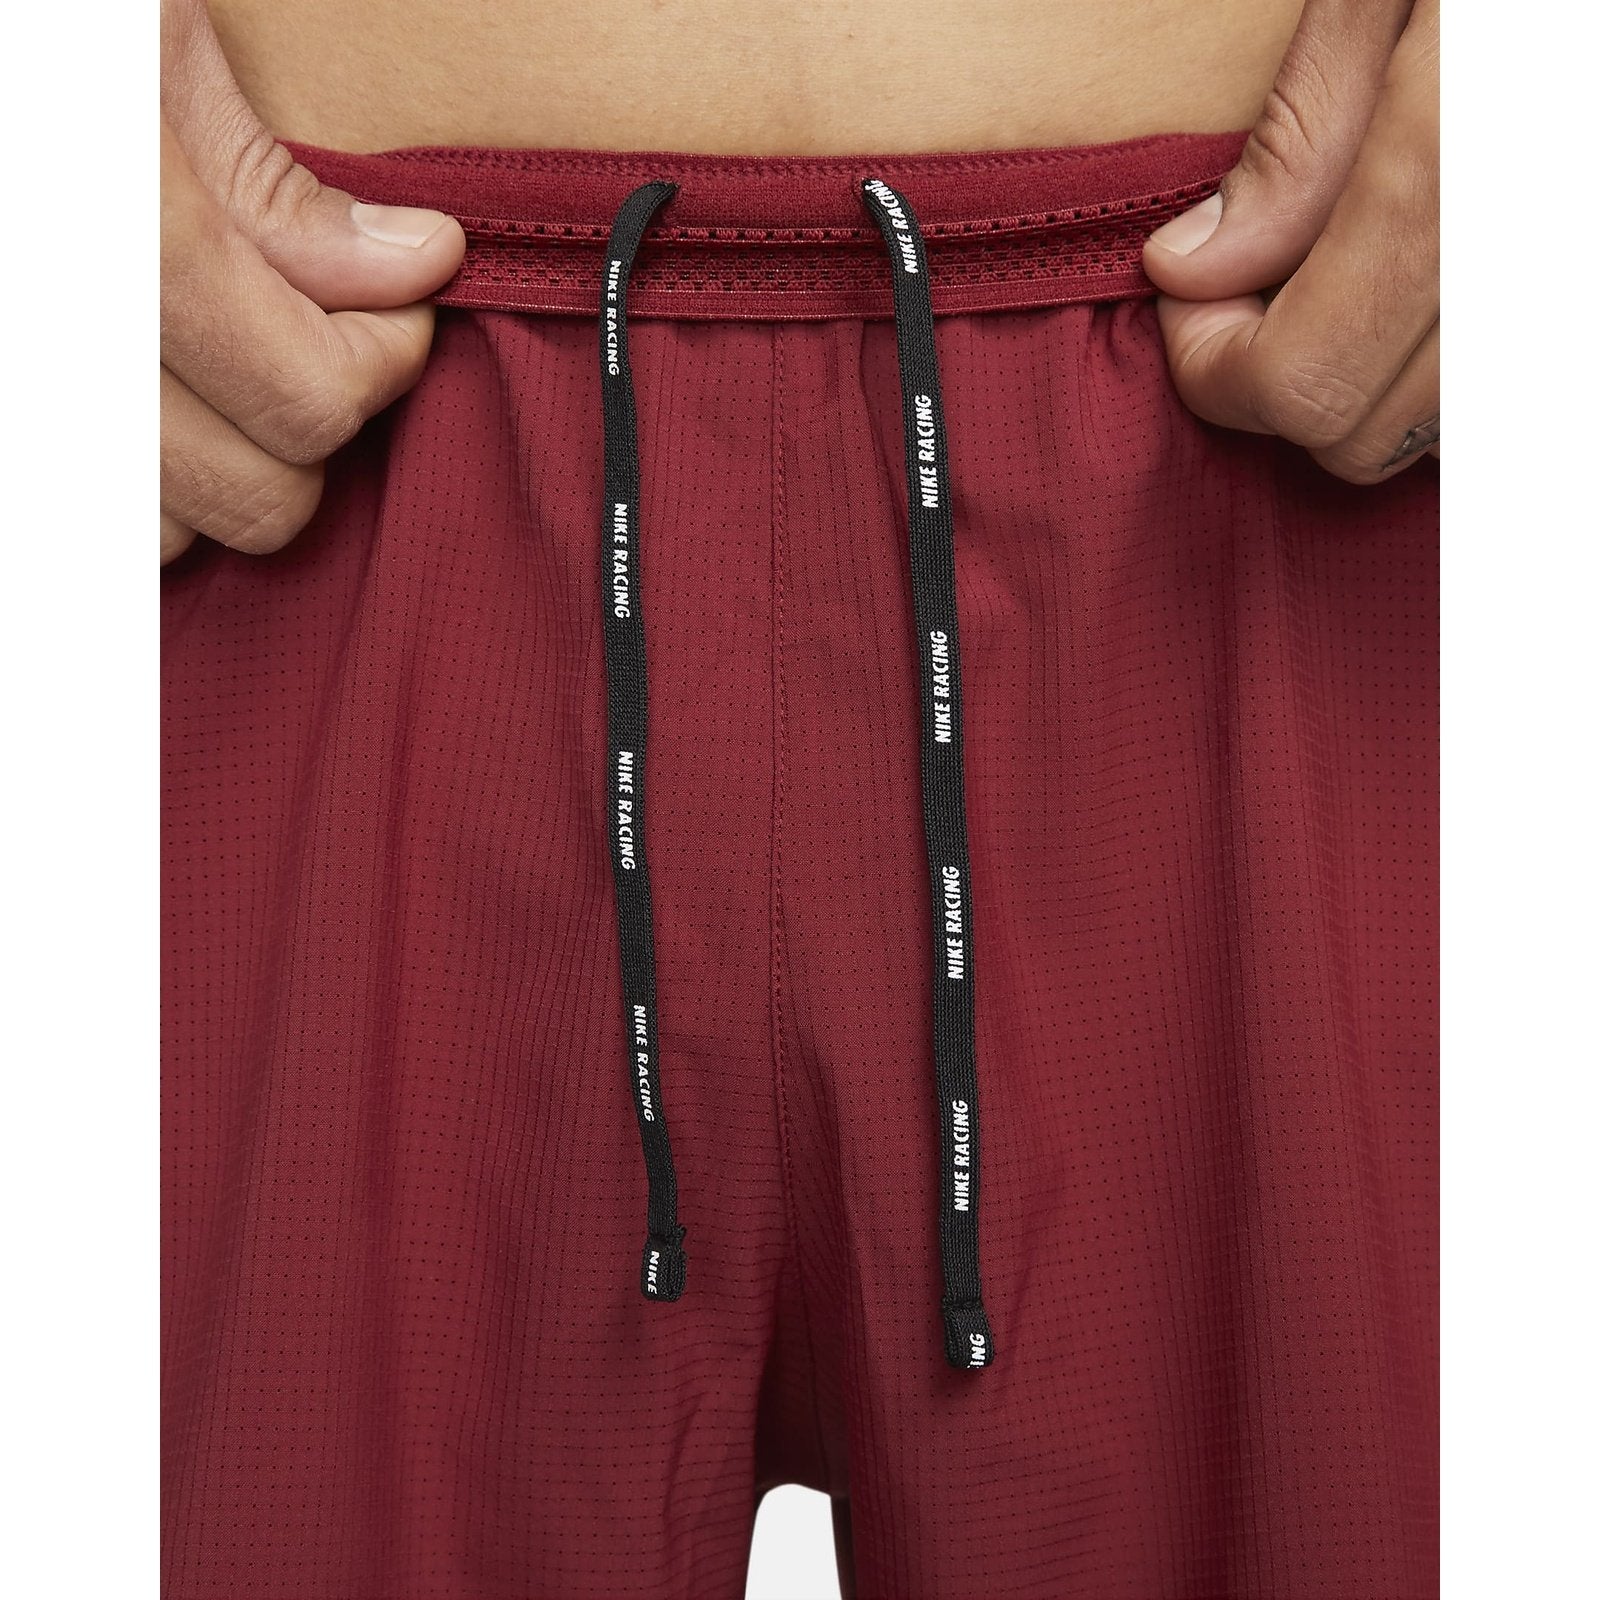 Nike Aeroswift 4 Inch Shorts Mens APPAREL - Mens Shorts TEAM RED/HYPER PINK